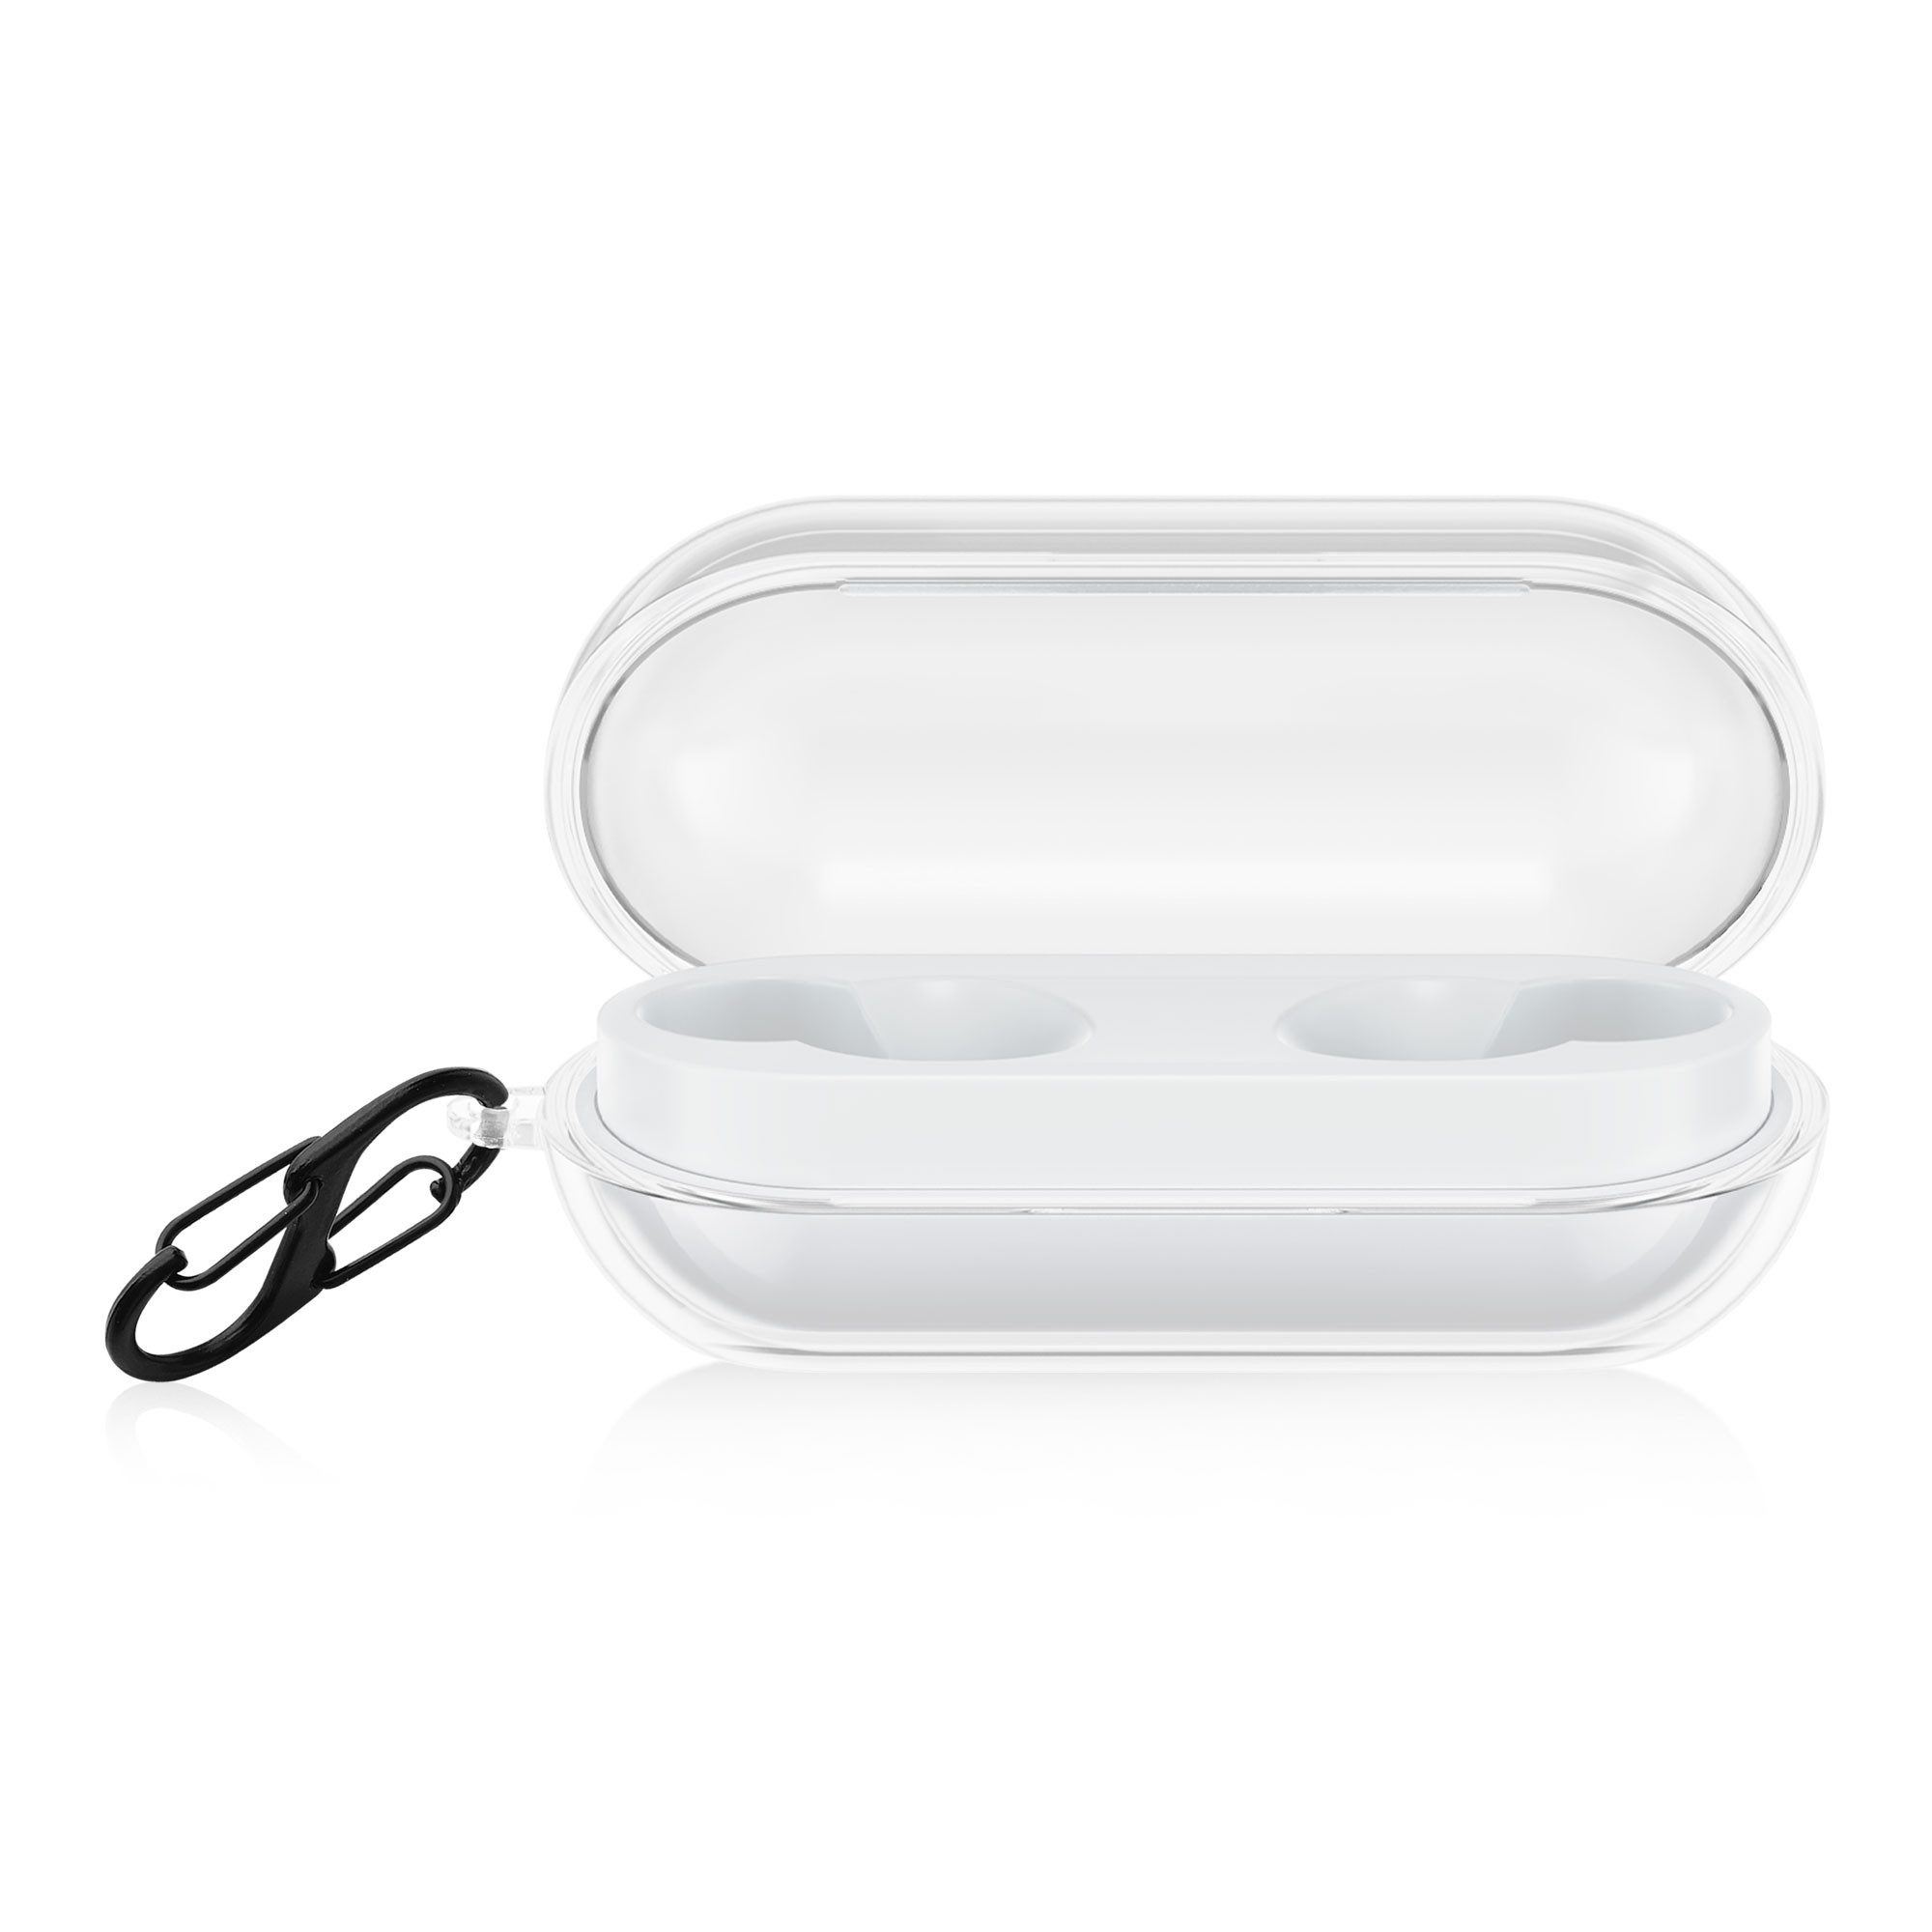 kwmobile Kopfhörer-Schutzhülle Hülle für Sony WF-C500, TPU Silikon Schutzhülle Case Cover Kopfhörer